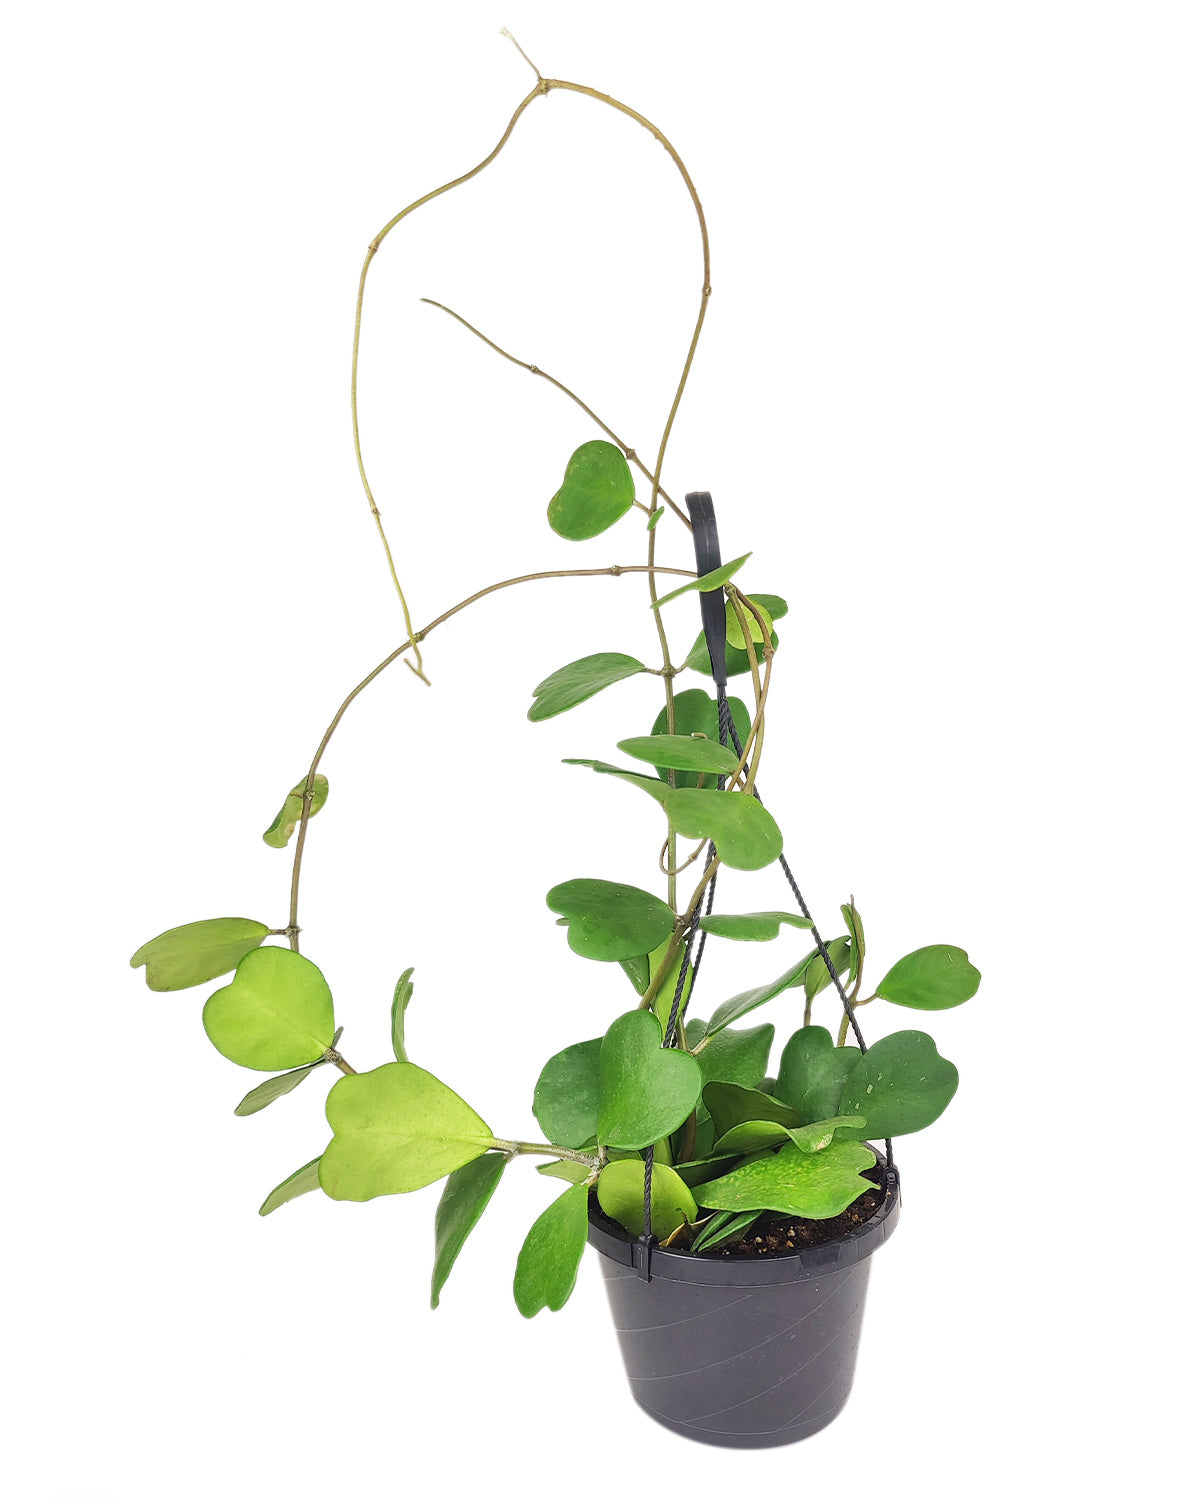 Sweetheart Hoya, Trailing Hoya Kerrii Heart, Heart-shaped plants, best gift plant ideas, evergreen heart-shaped foliage